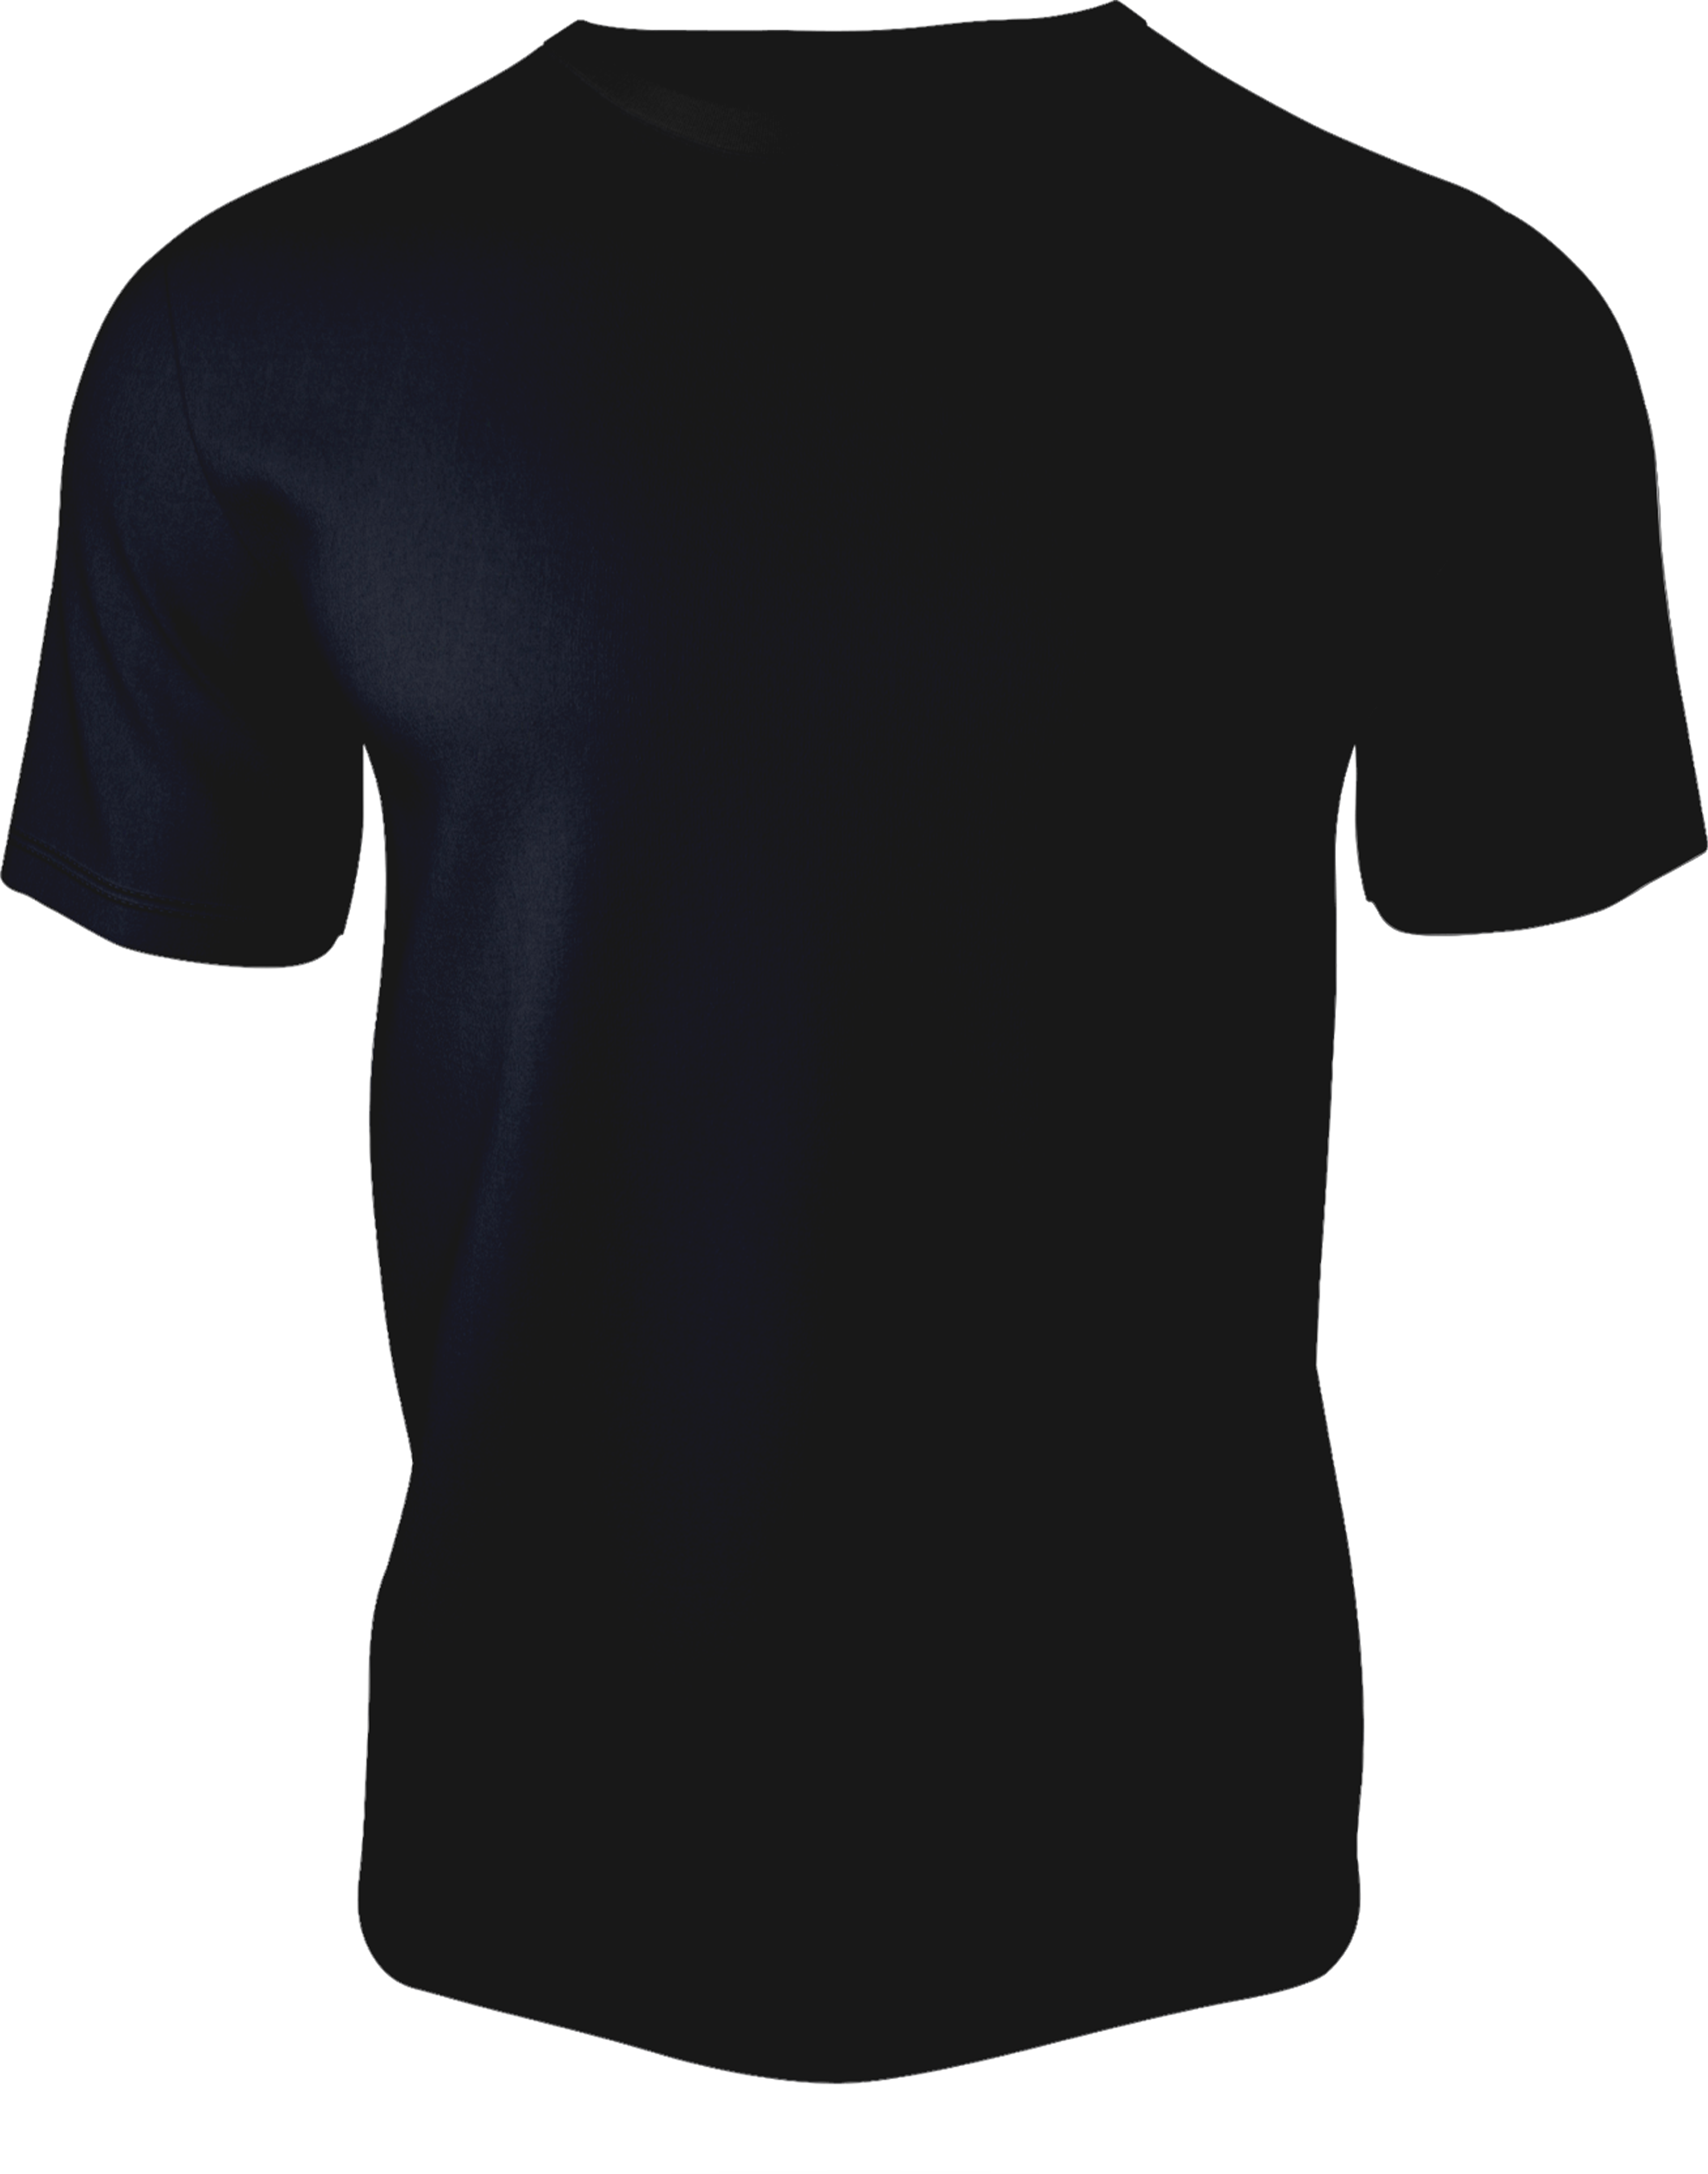 Wacoal Women's Black Basic Benefits Spacer T-Shirt Bra Size 34C style  853290 - Helia Beer Co